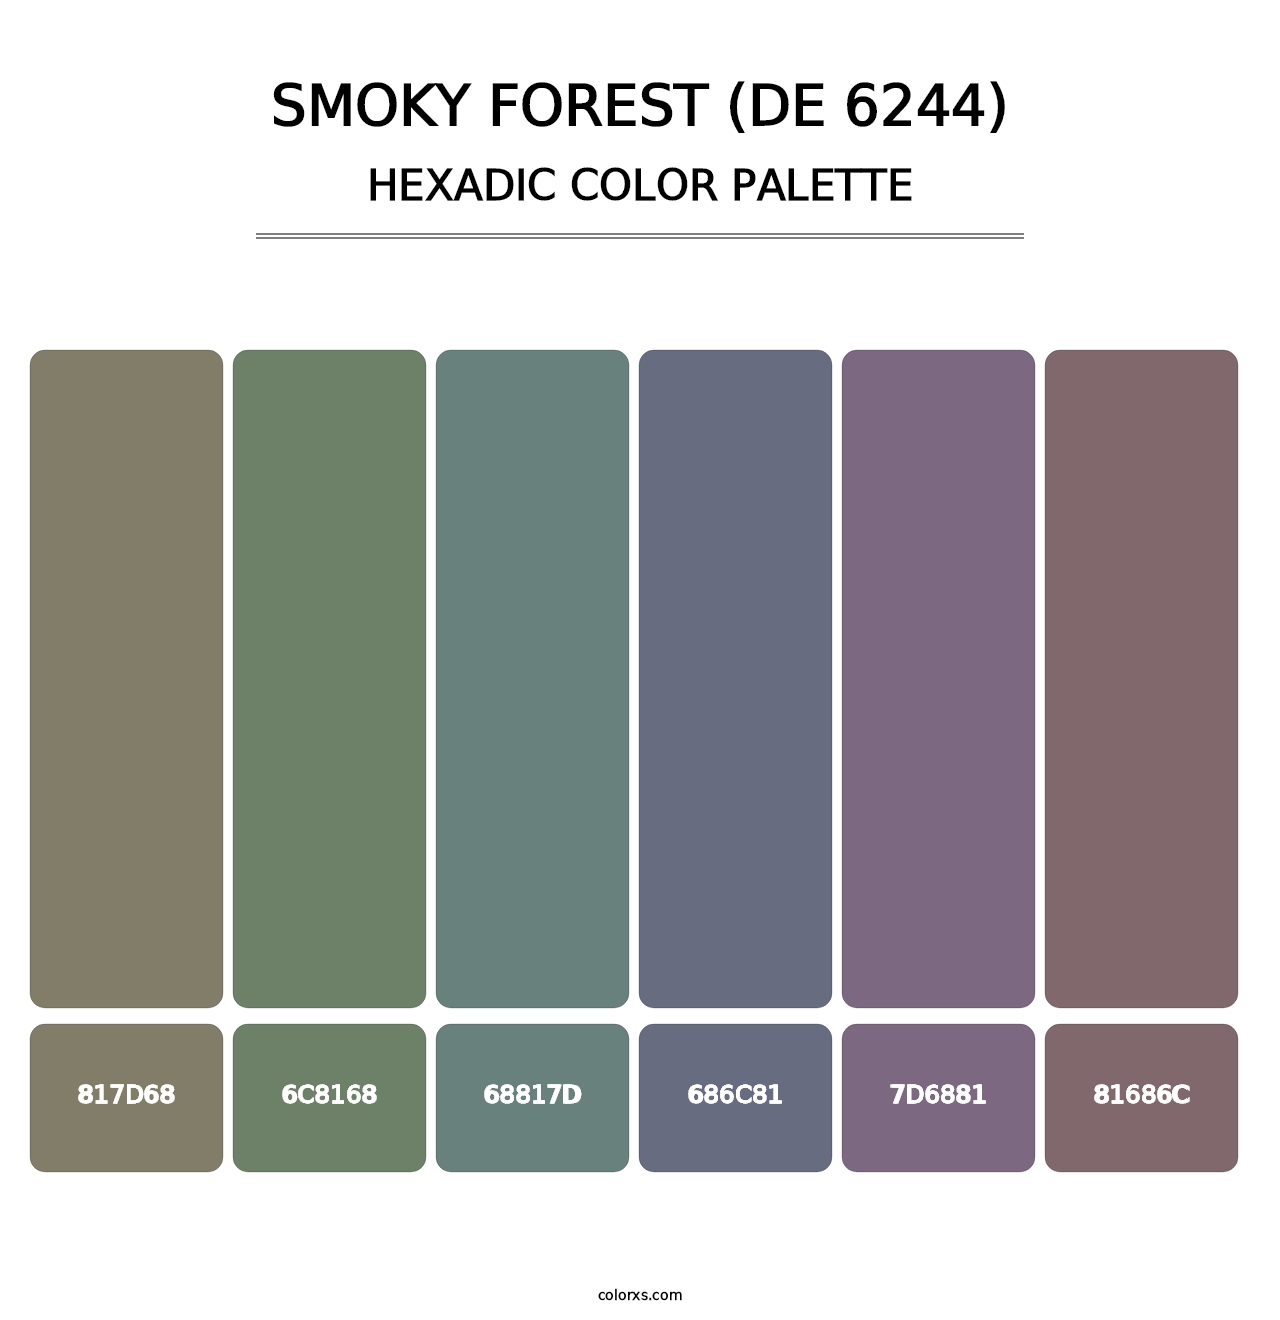 Smoky Forest (DE 6244) - Hexadic Color Palette